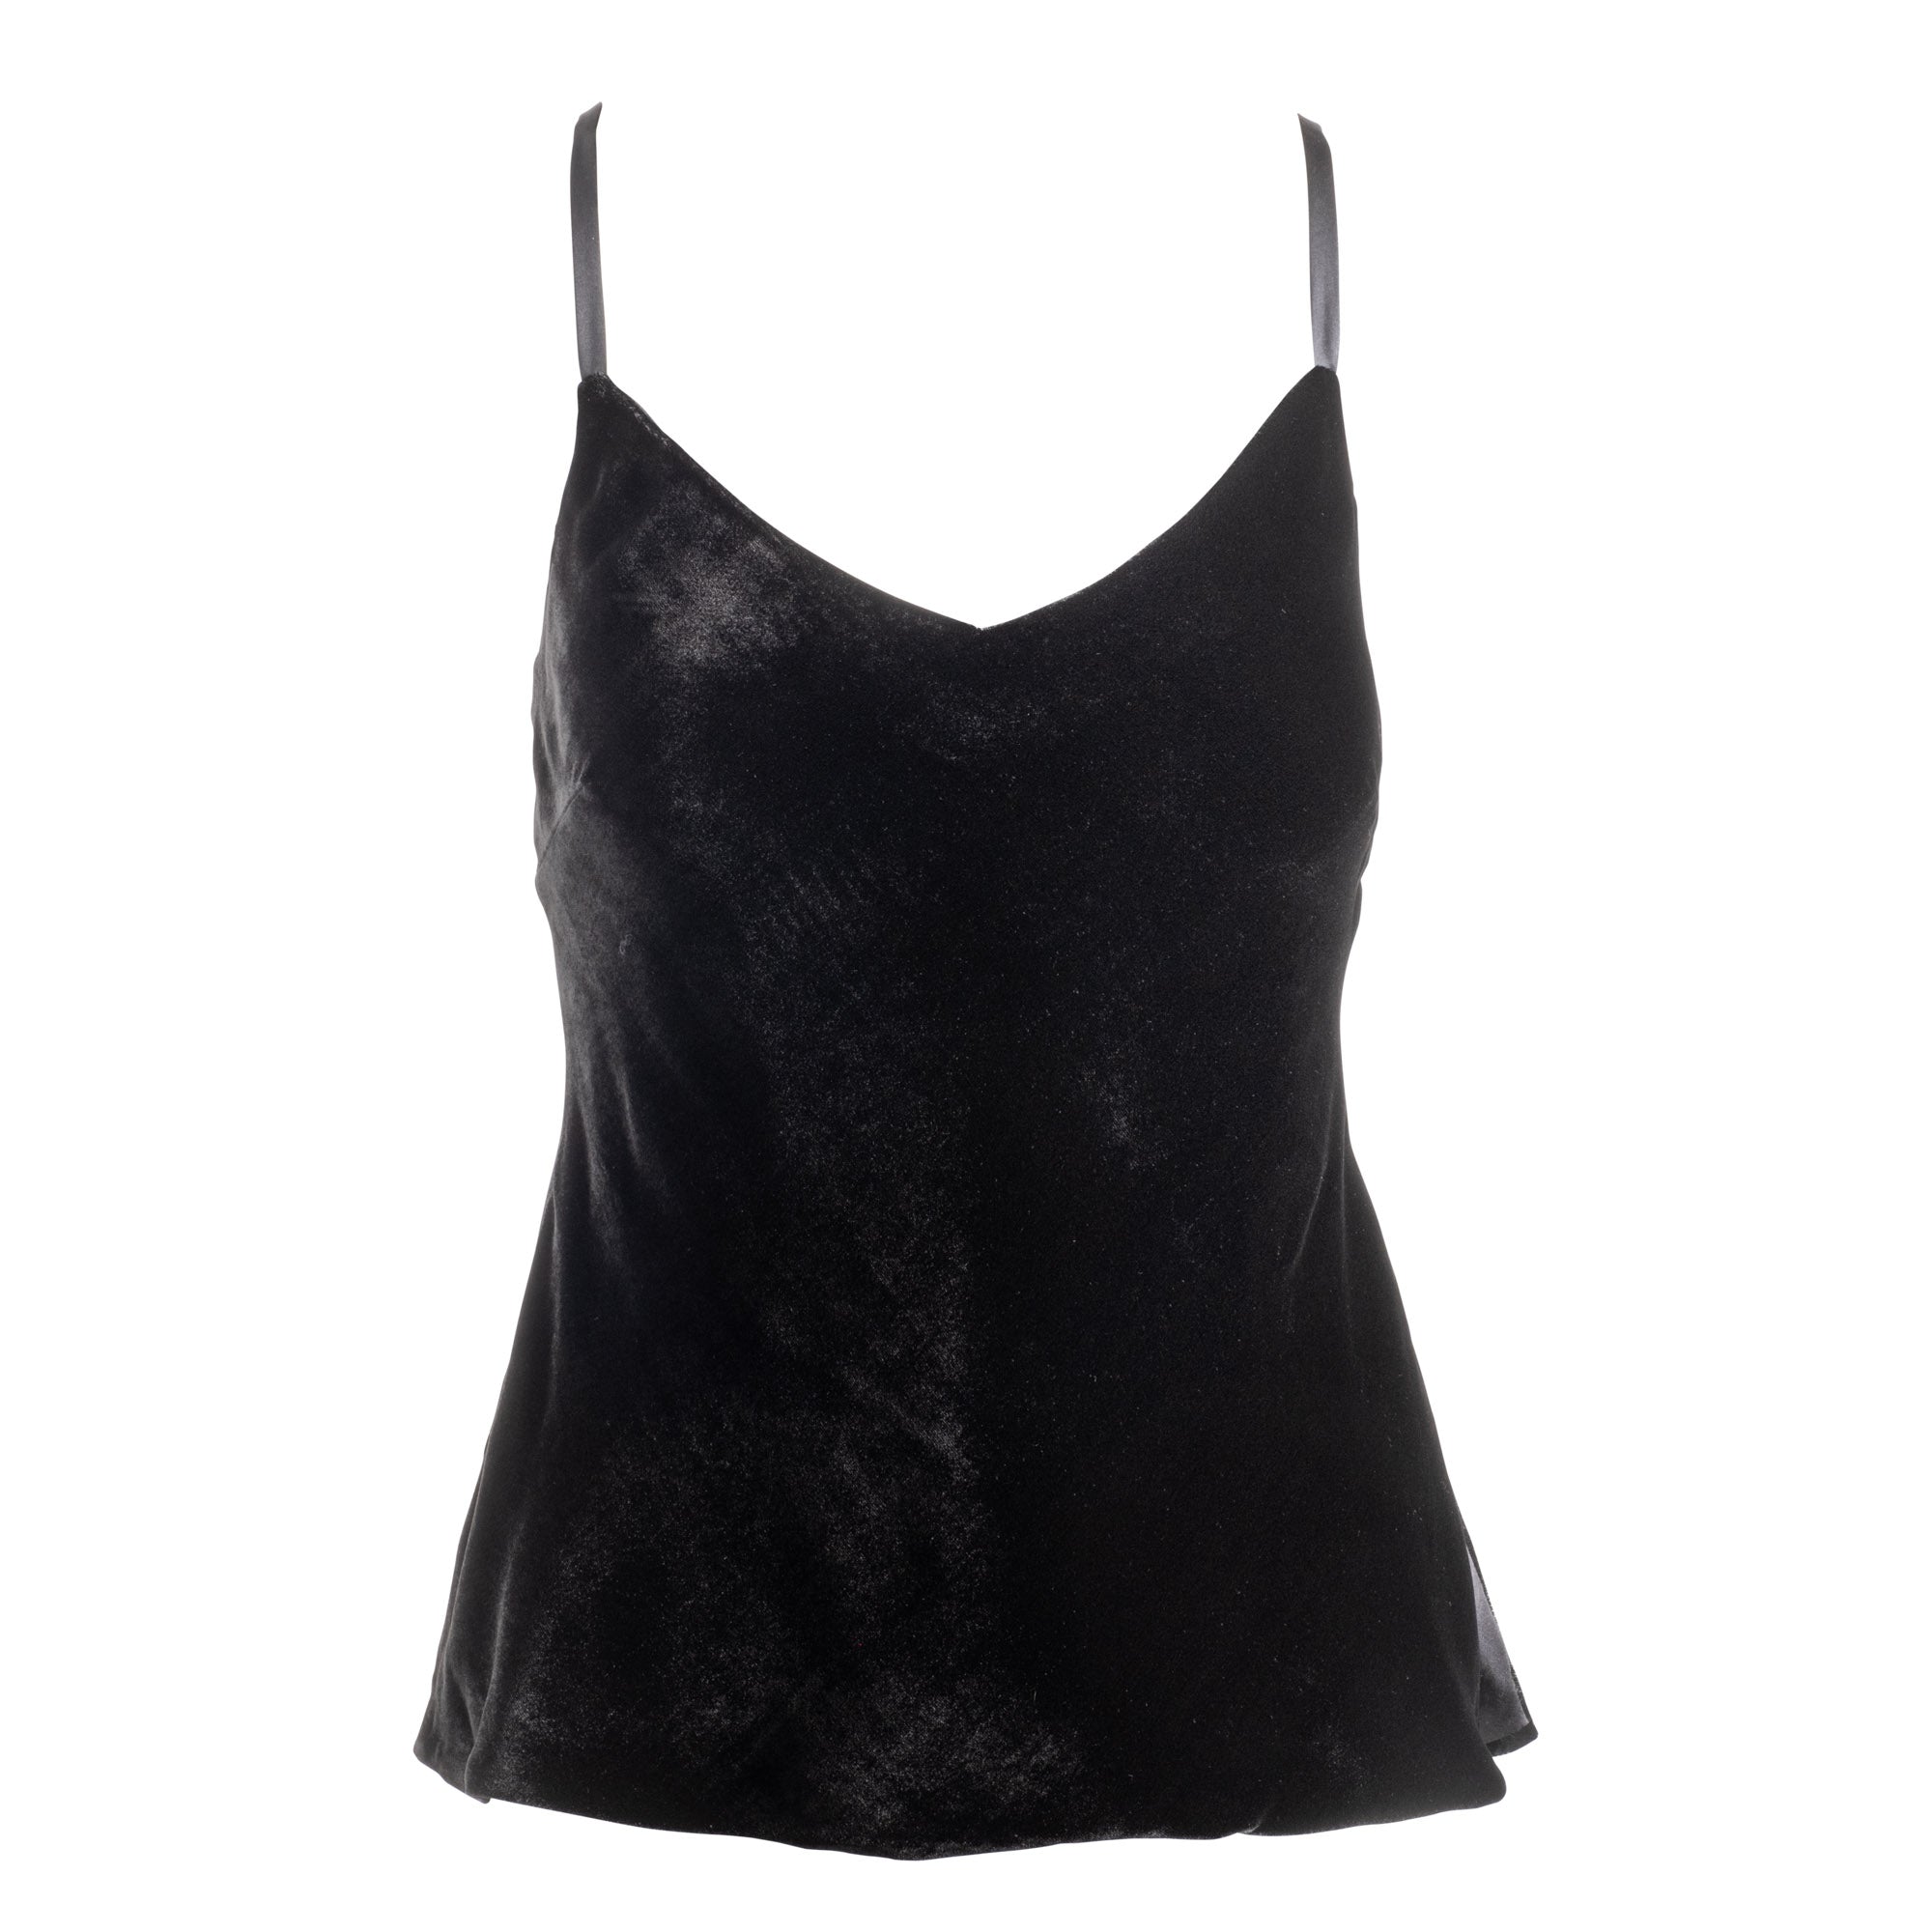 Black Velvet Camisole NWT Eileen Fisher Top Tank Cami $138 Stretch